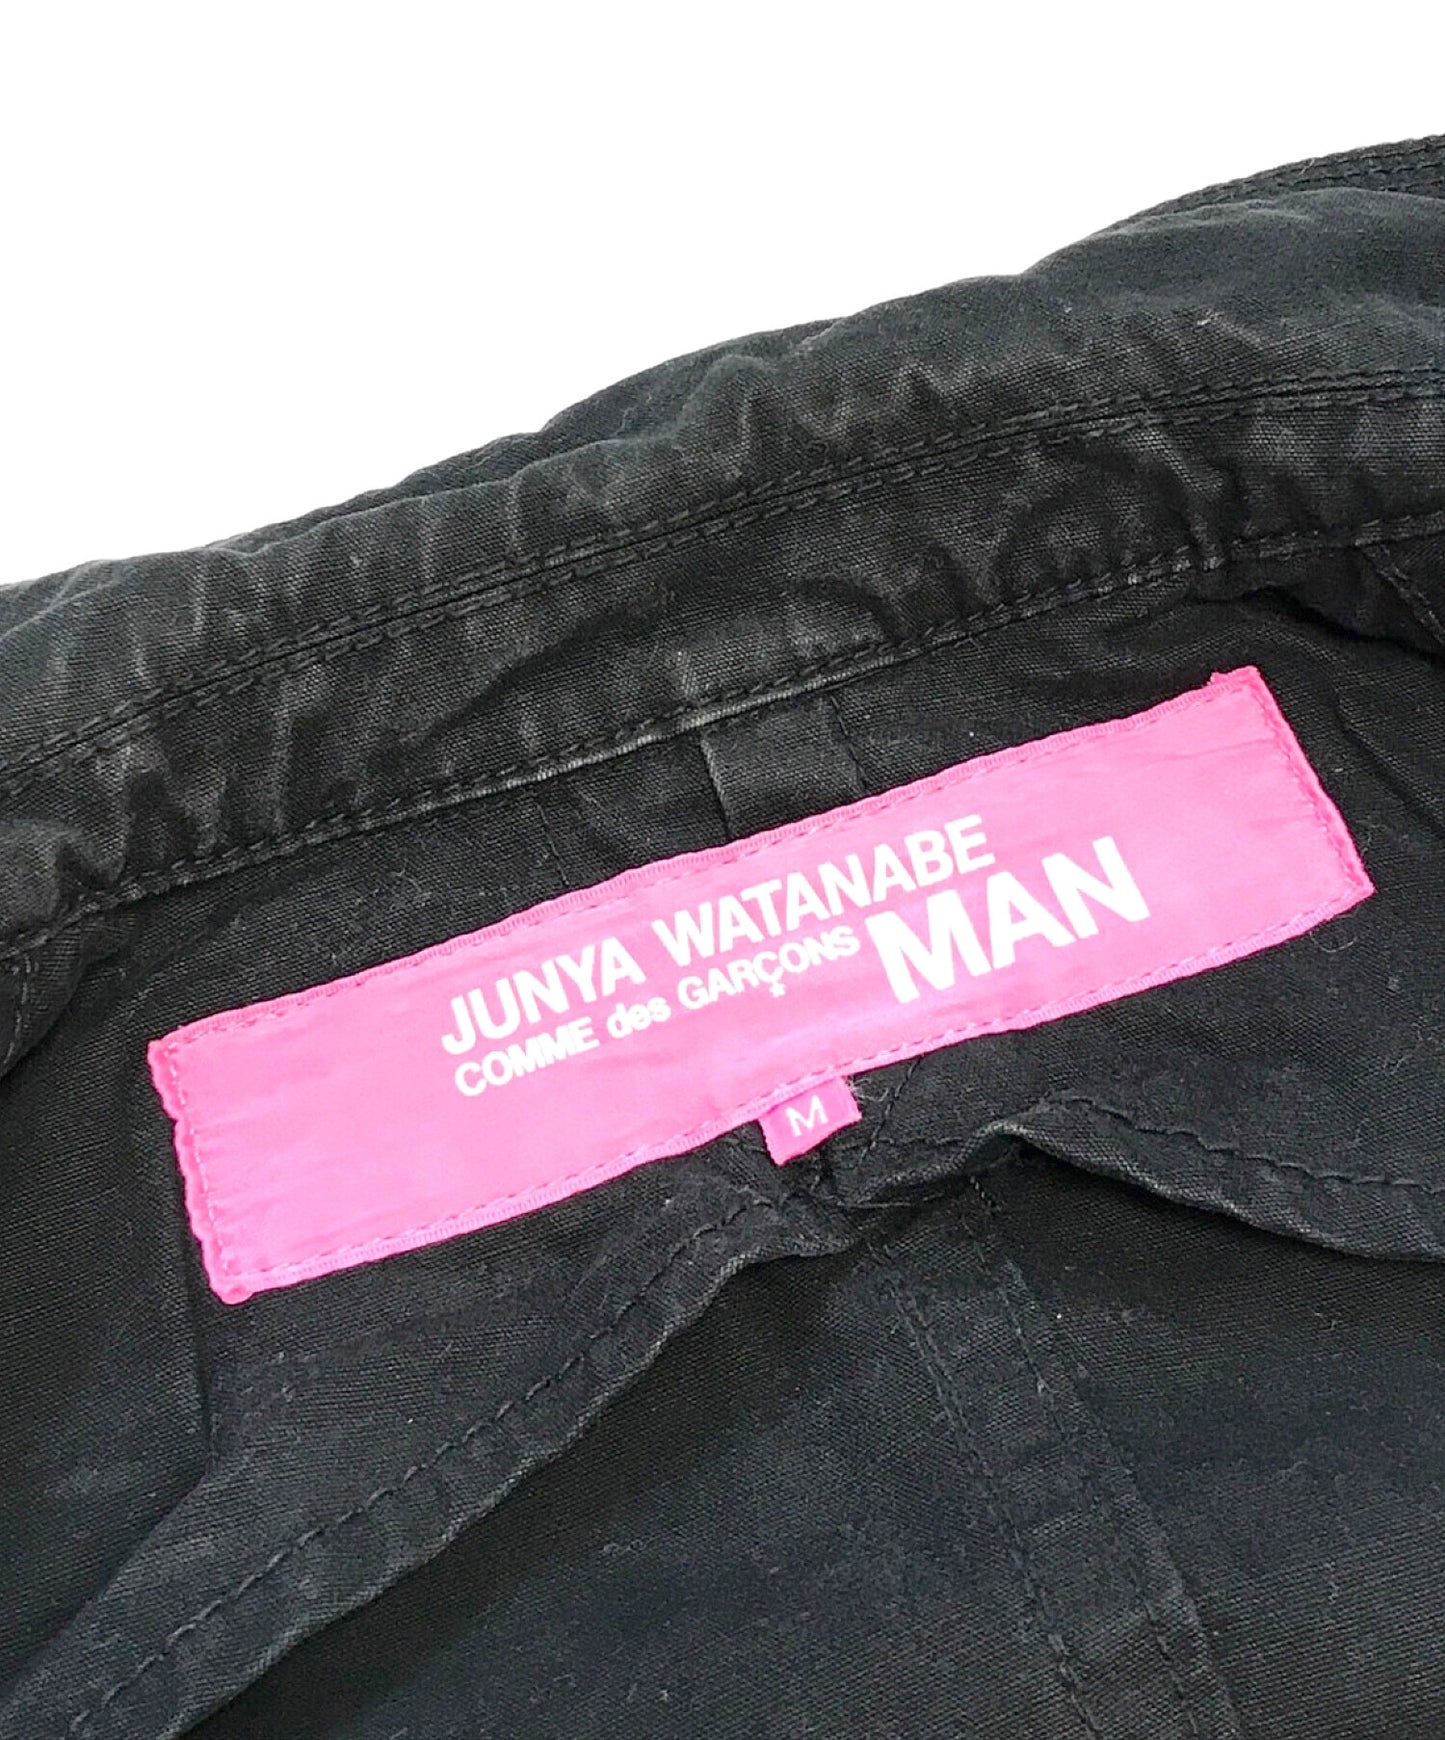 Comme des Garcons Junya Watanabe Man Tailored Jacket UO-J025